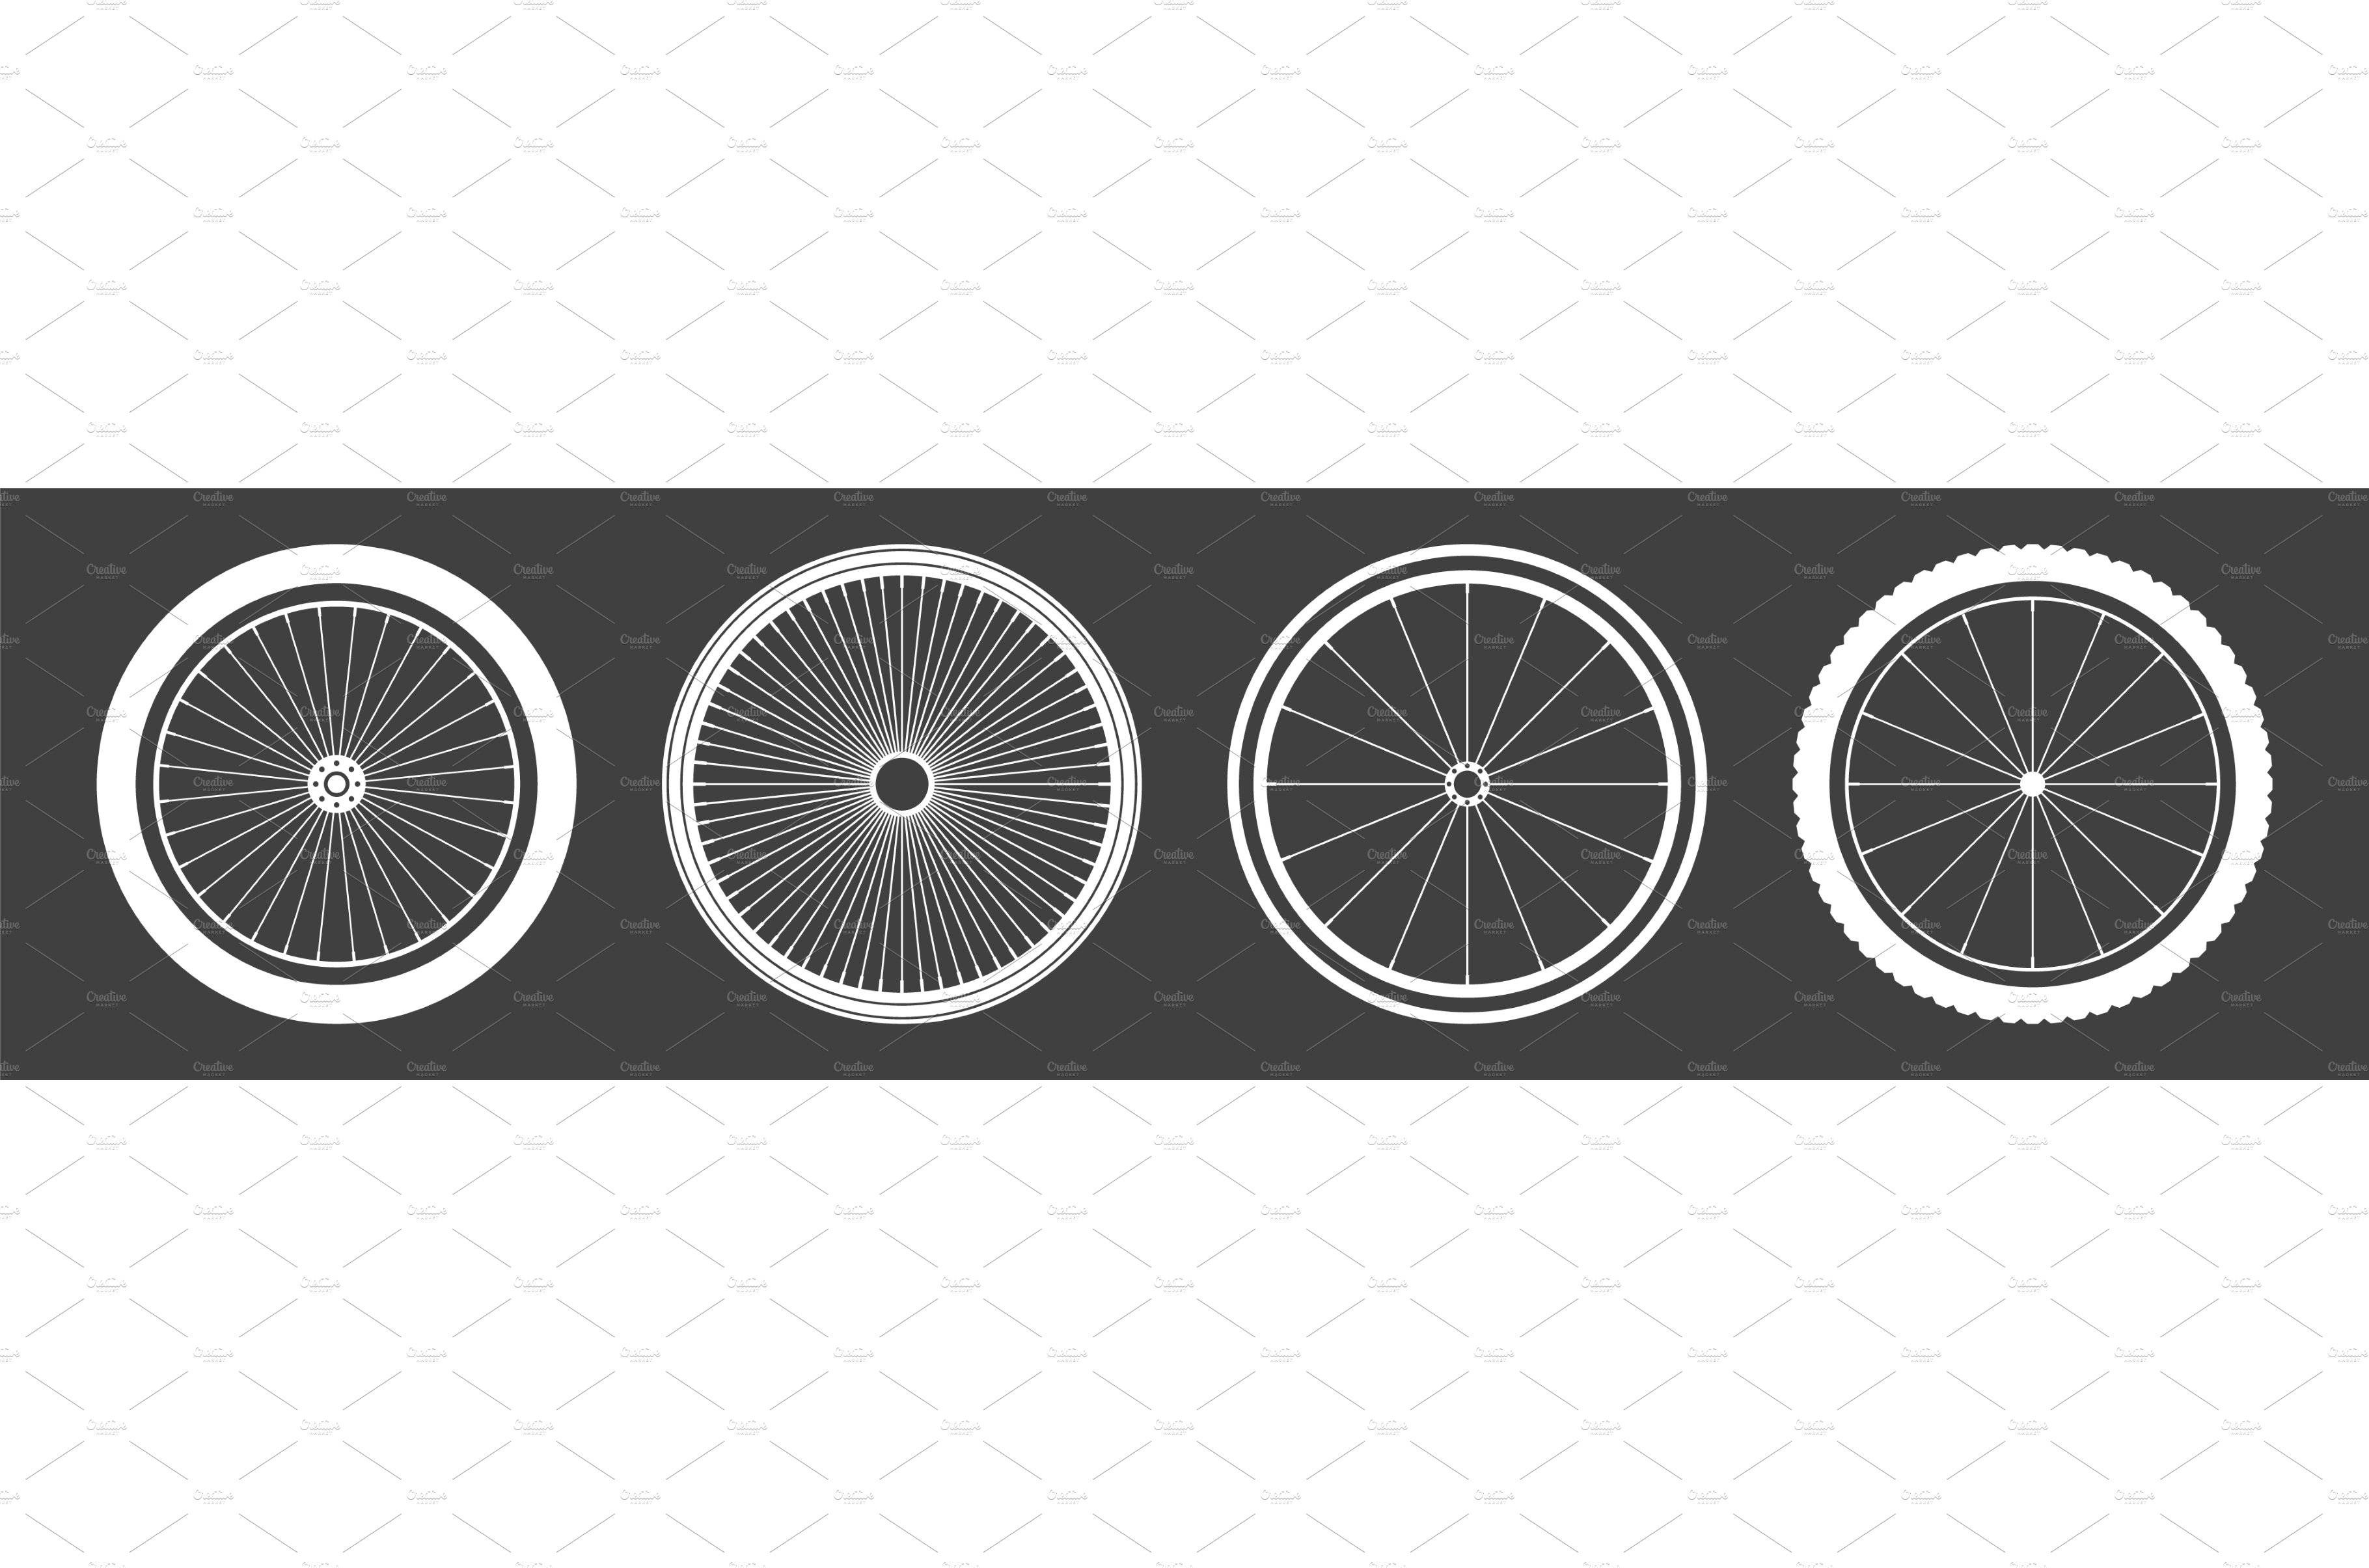 Black bicycle wheel symbols cover image.